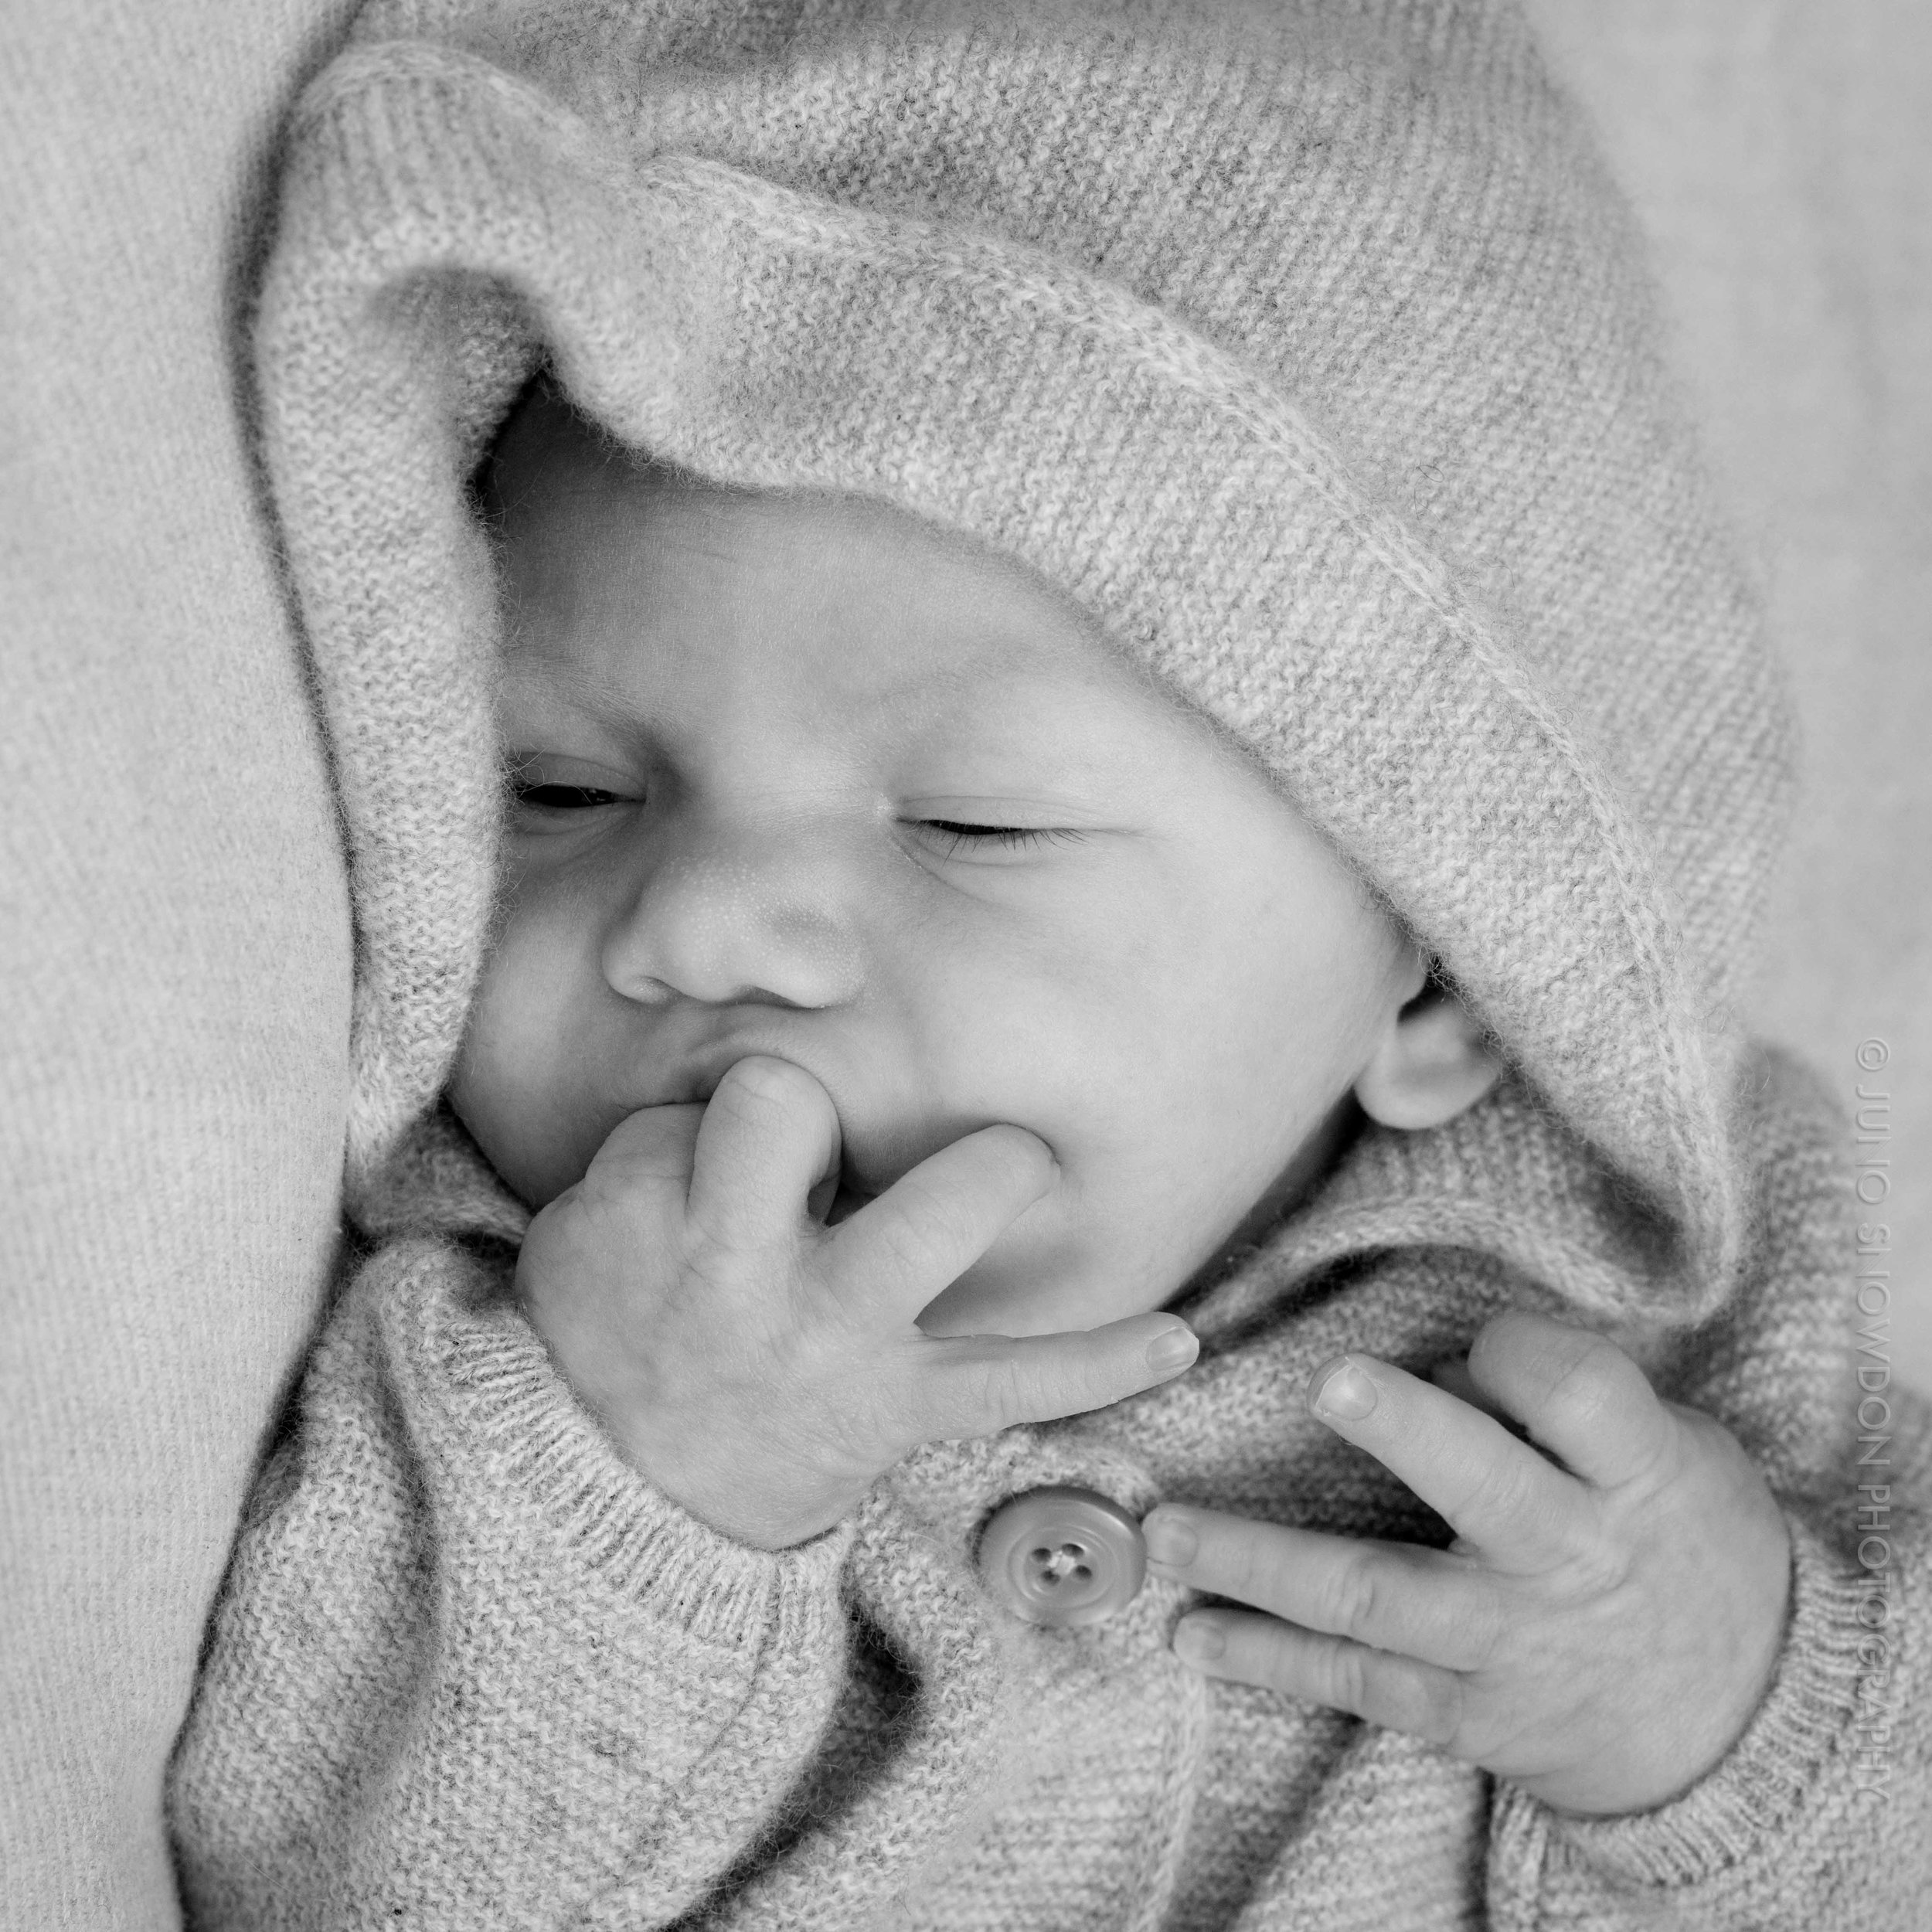 juno-snowdon-photography-newborn-portrait-7021.jpg